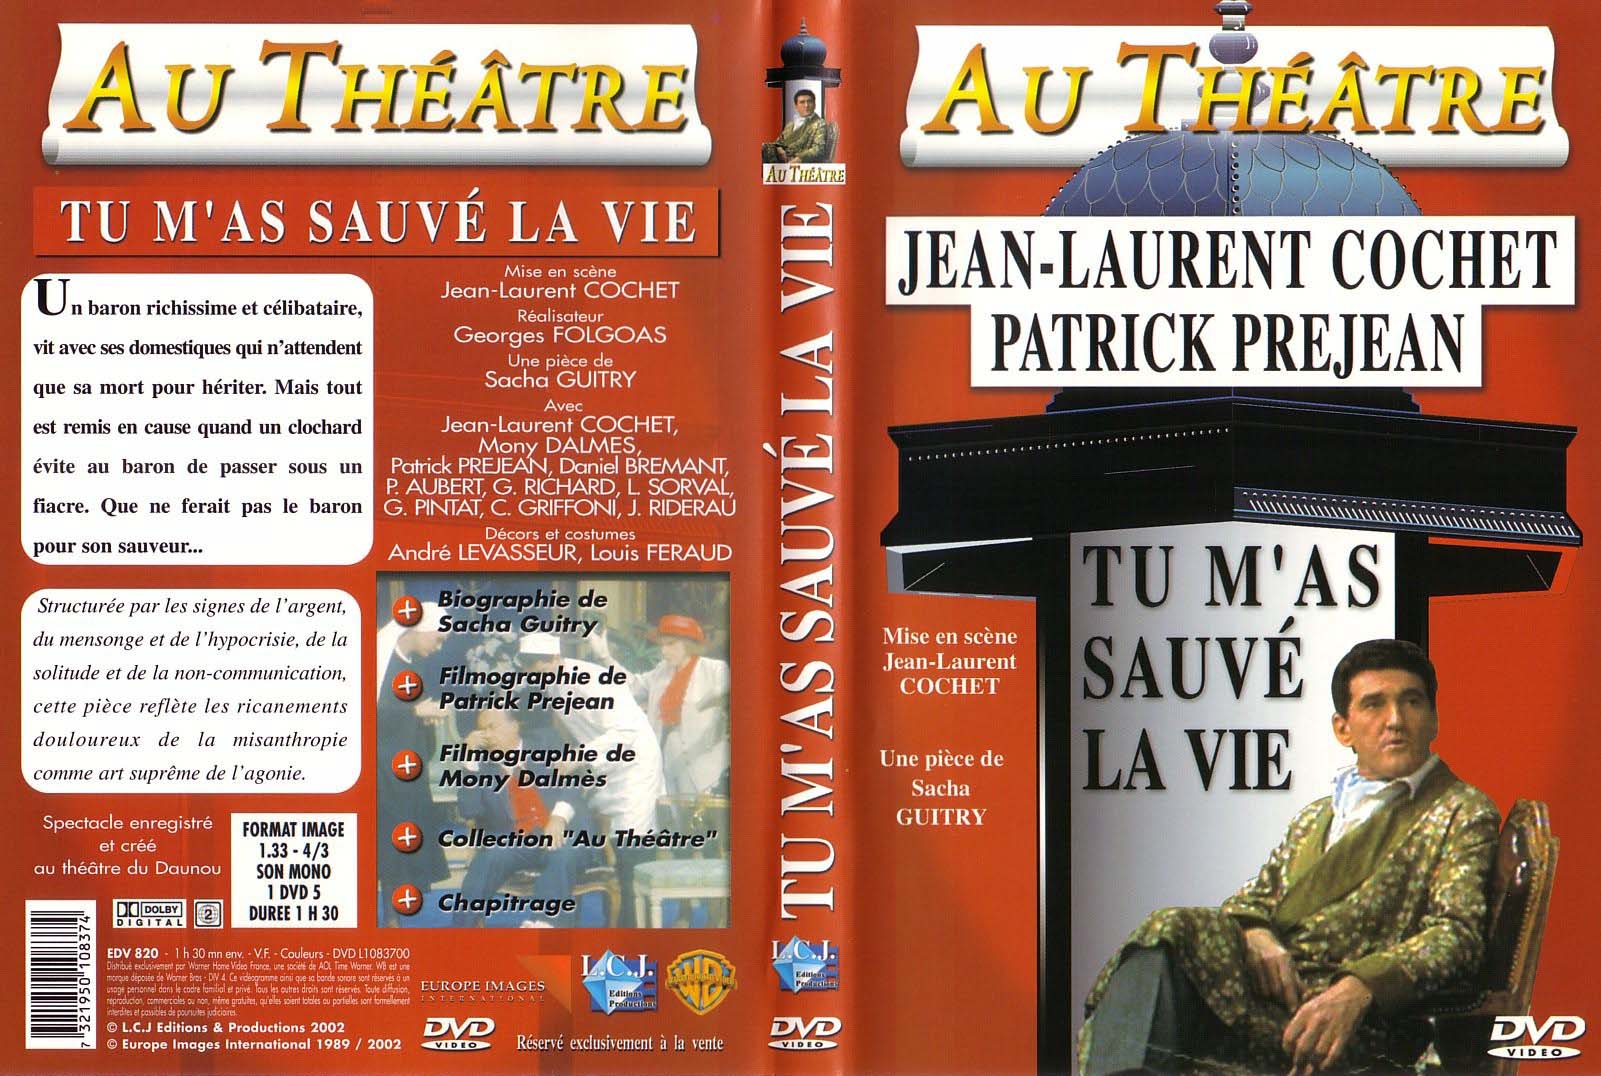 Jaquette DVD Au theatre - tu m